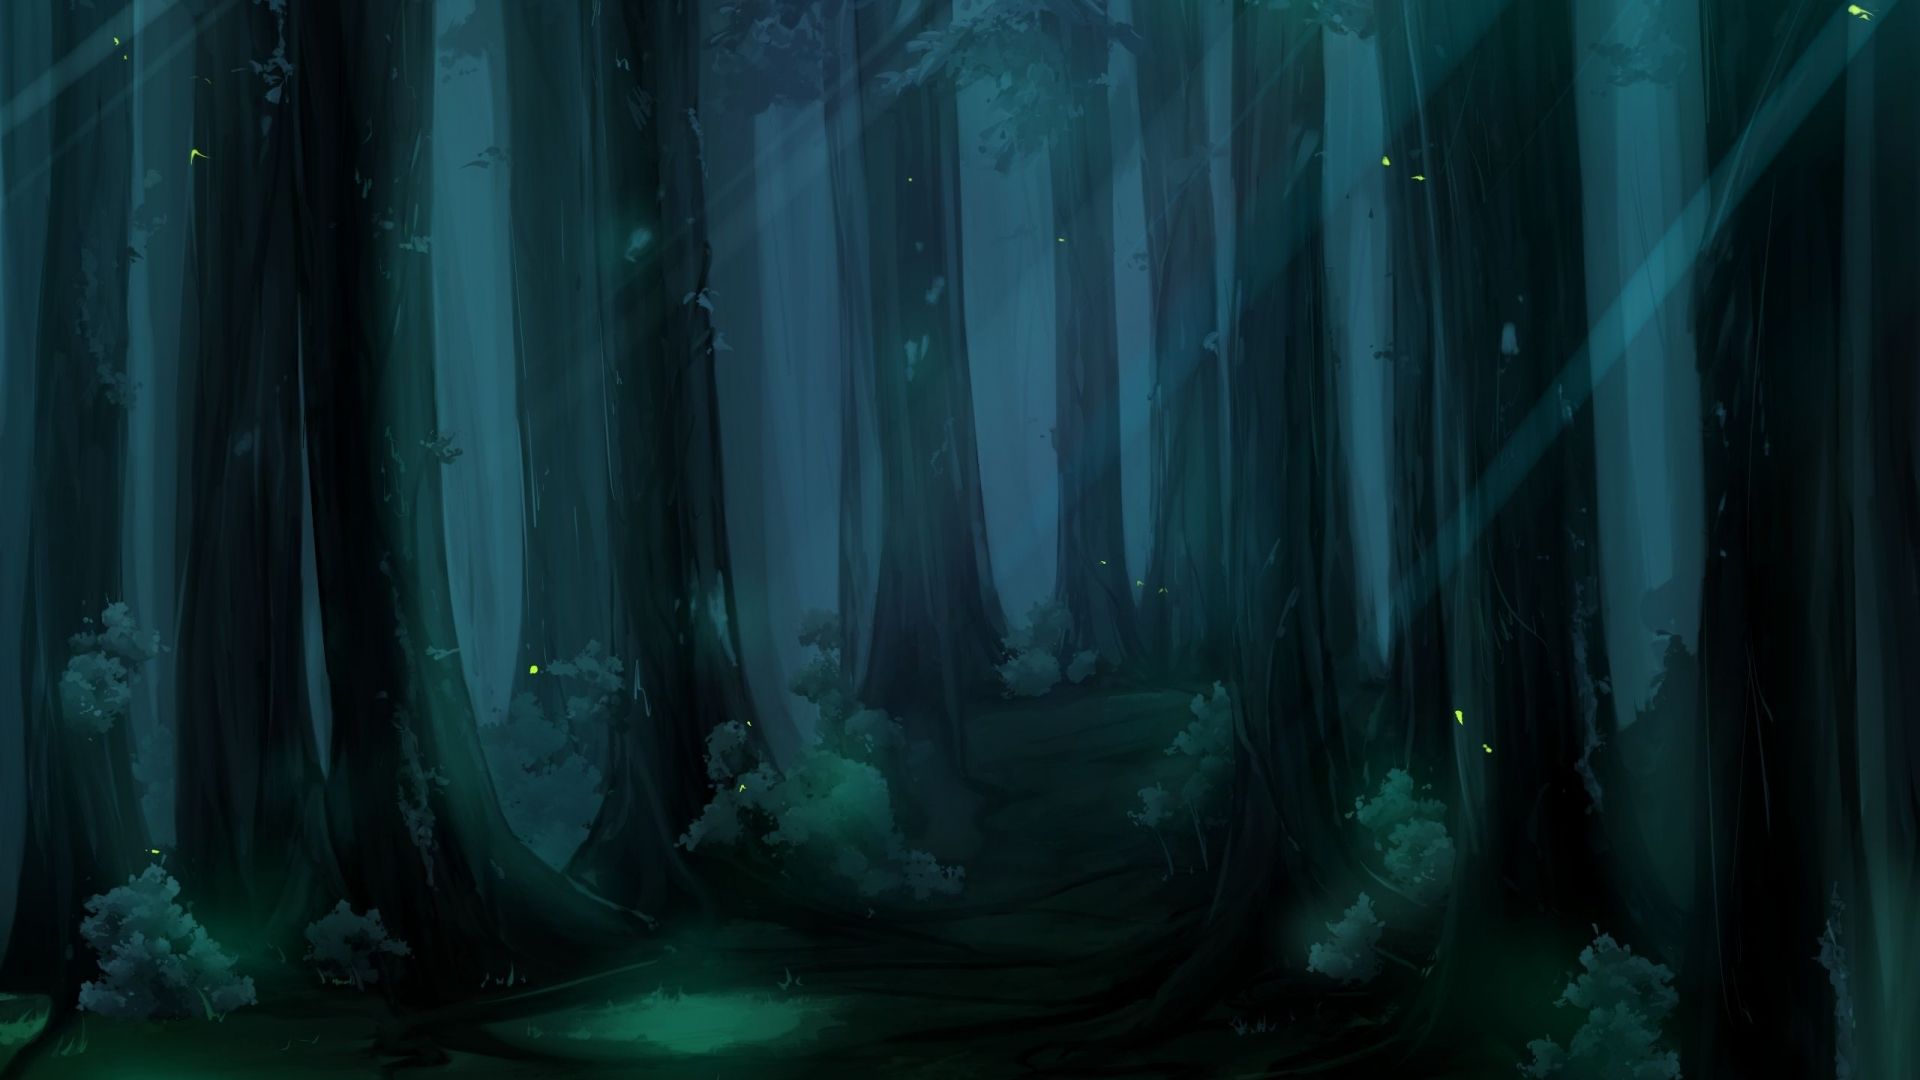 Free download Anime Dark Forest Wallpaper Top Anime Dark Forest